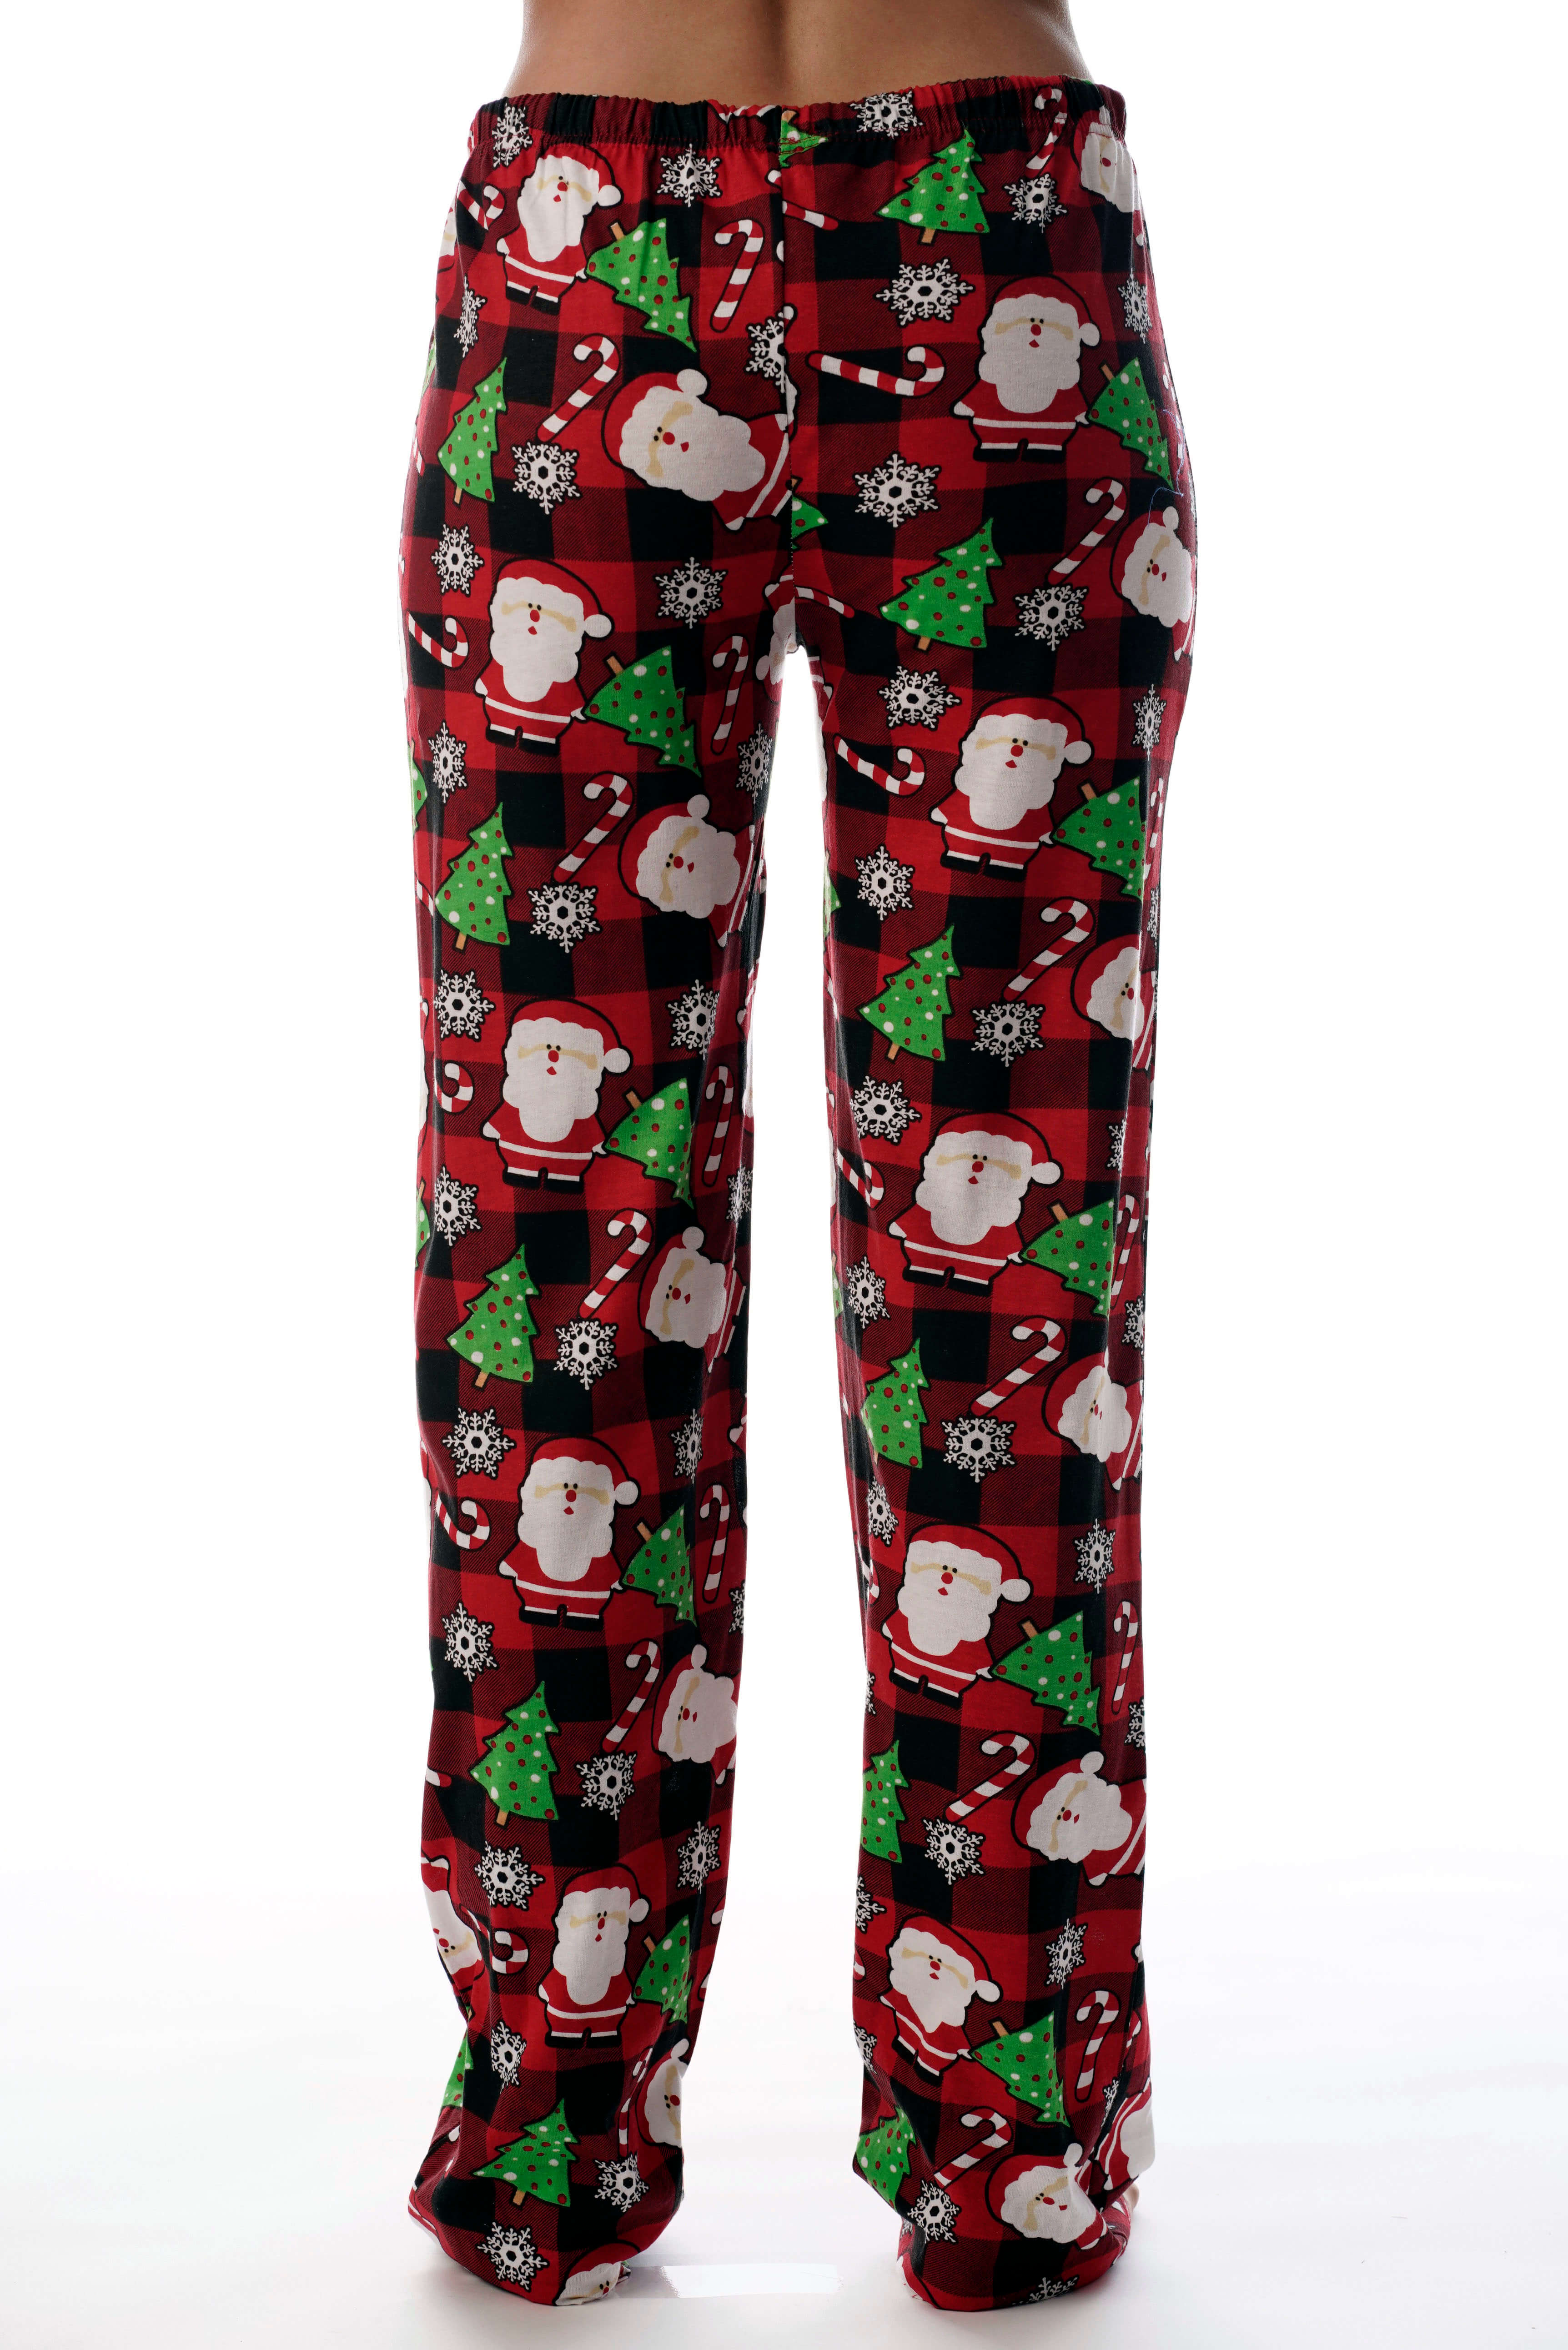 Just Love Women Ugly Christmas Pajama Pants Sleepwear | eBay